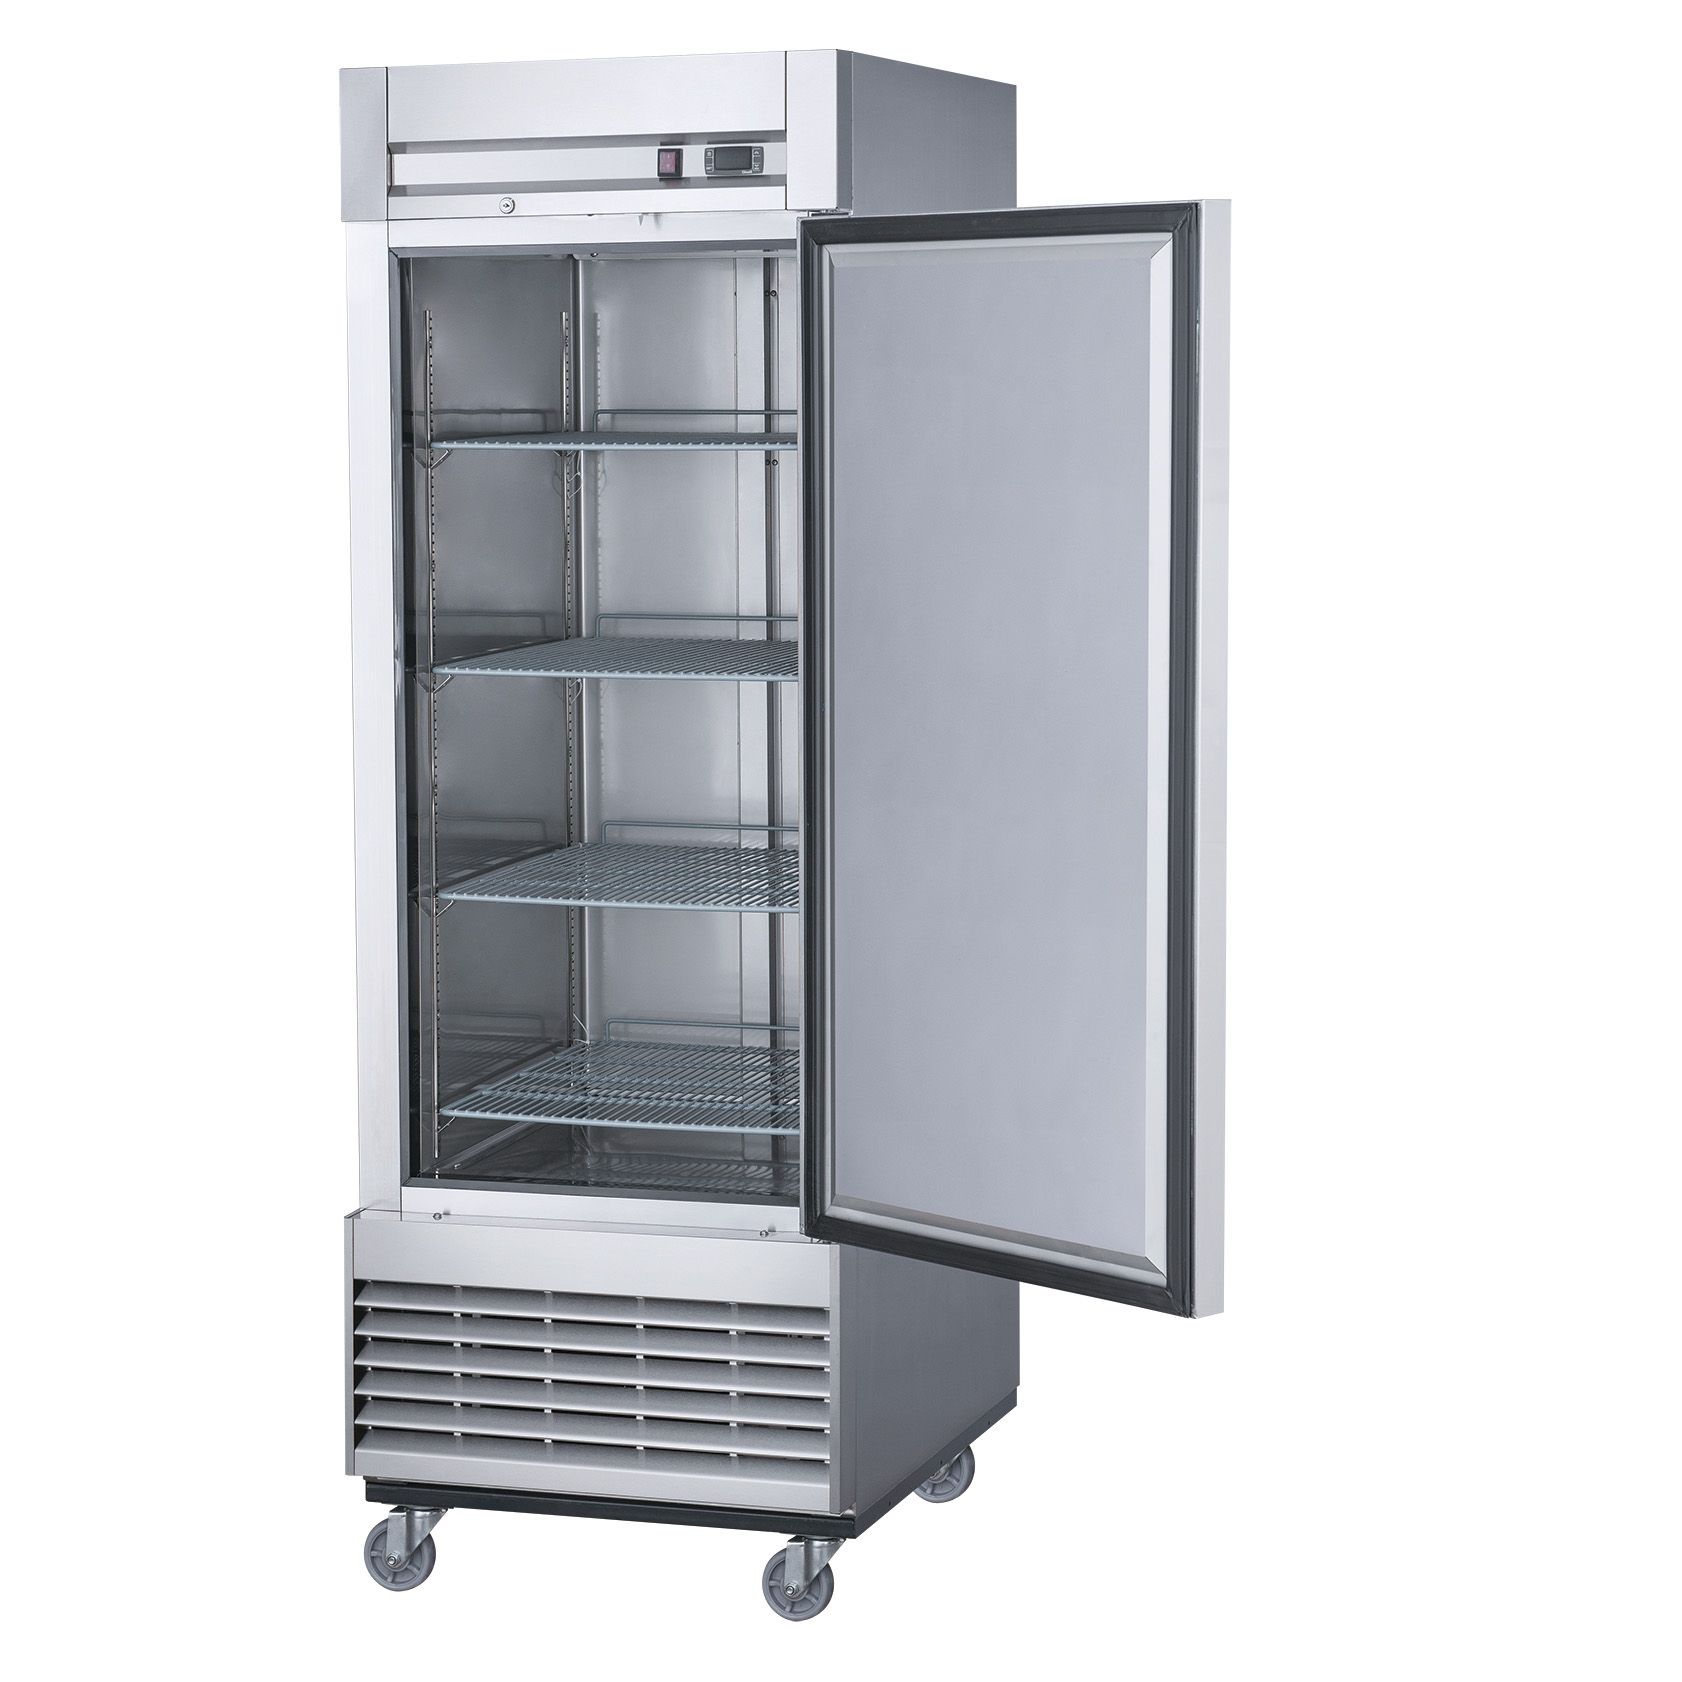 Elite Kitchen Supply 60 in. W 15.5 Cu. ft. 2-Door Commercial Upright Undercounter Freezer, Silver